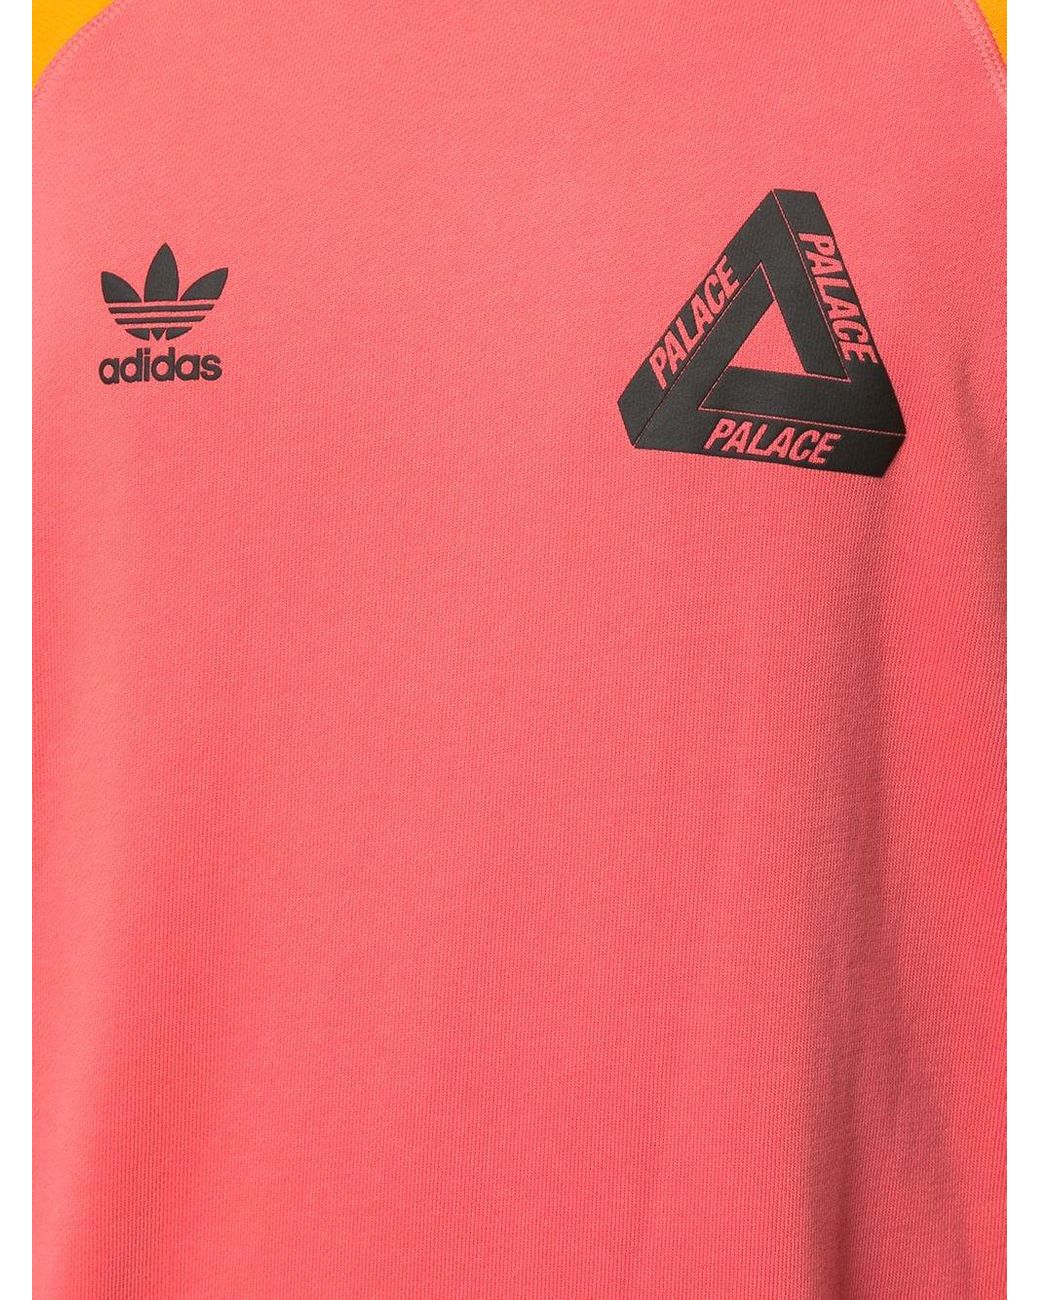 Palace X Adidas Crew Neck Sweatshirt in Pink for Men | Lyst UK